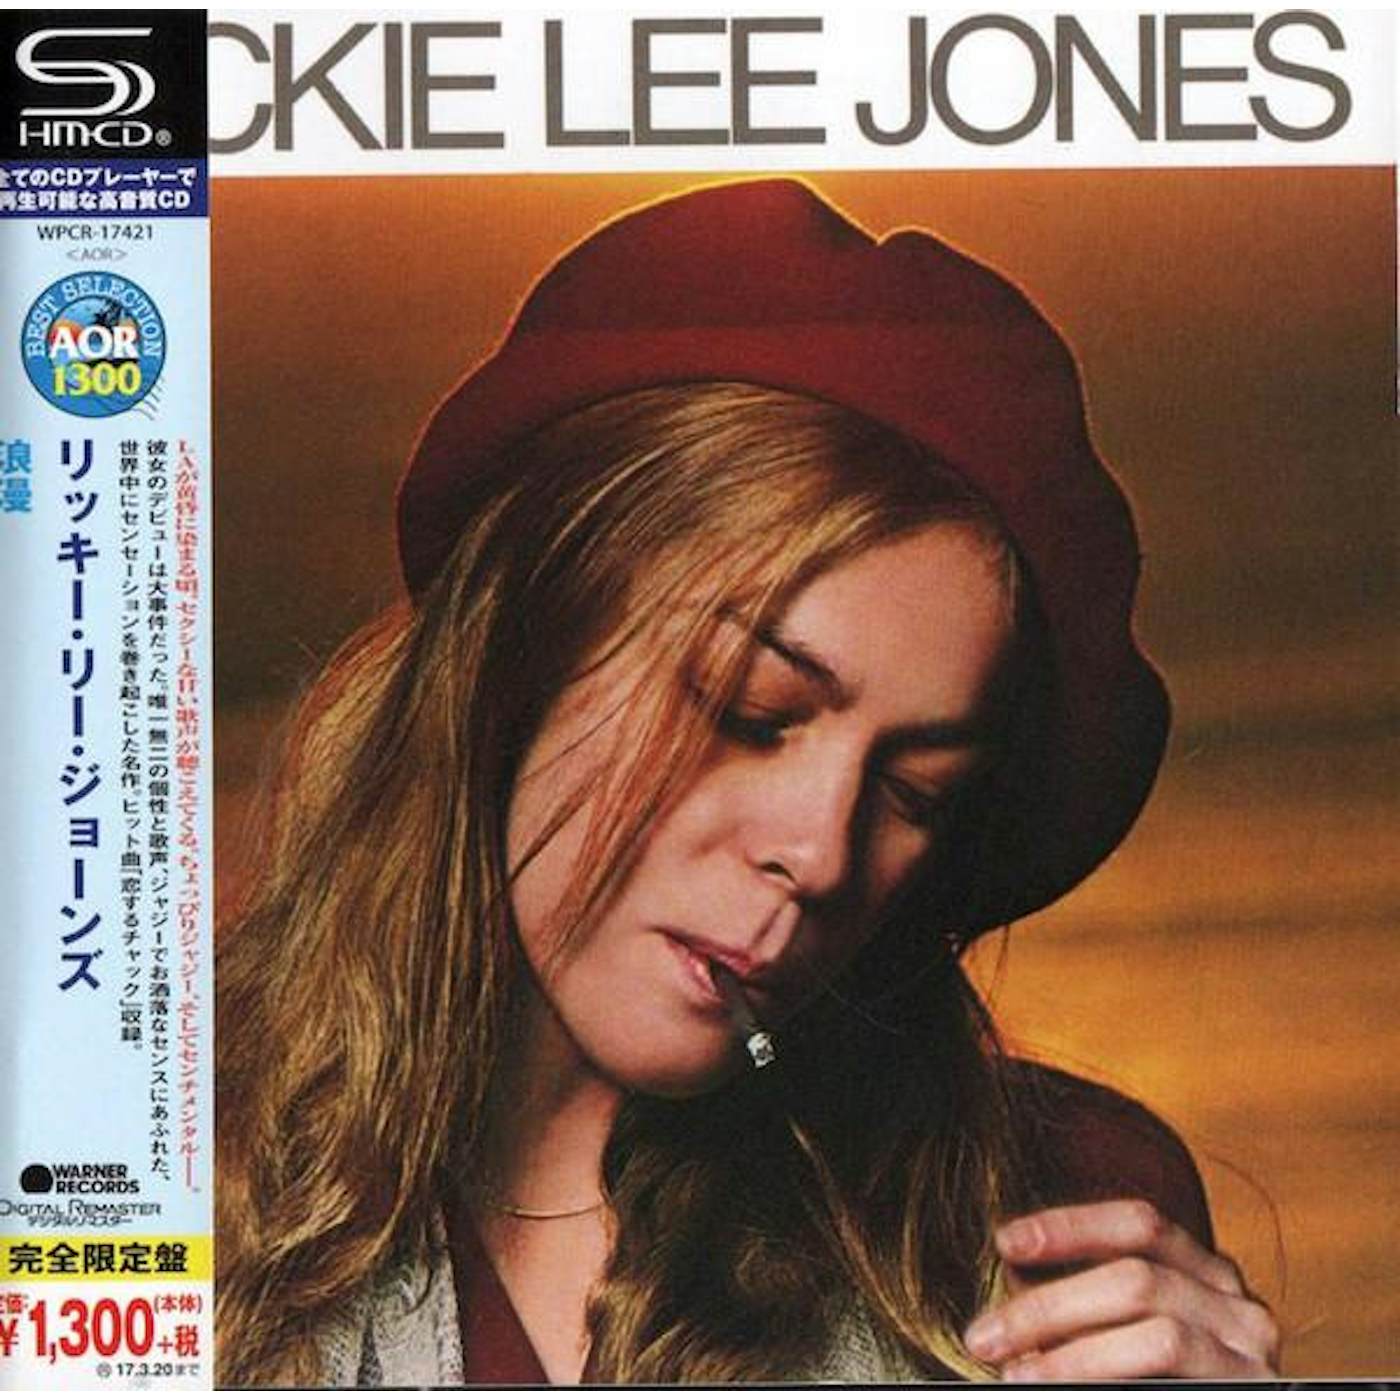 RICKIE LEE JONES (SHM) (2008 REMASTER) CD